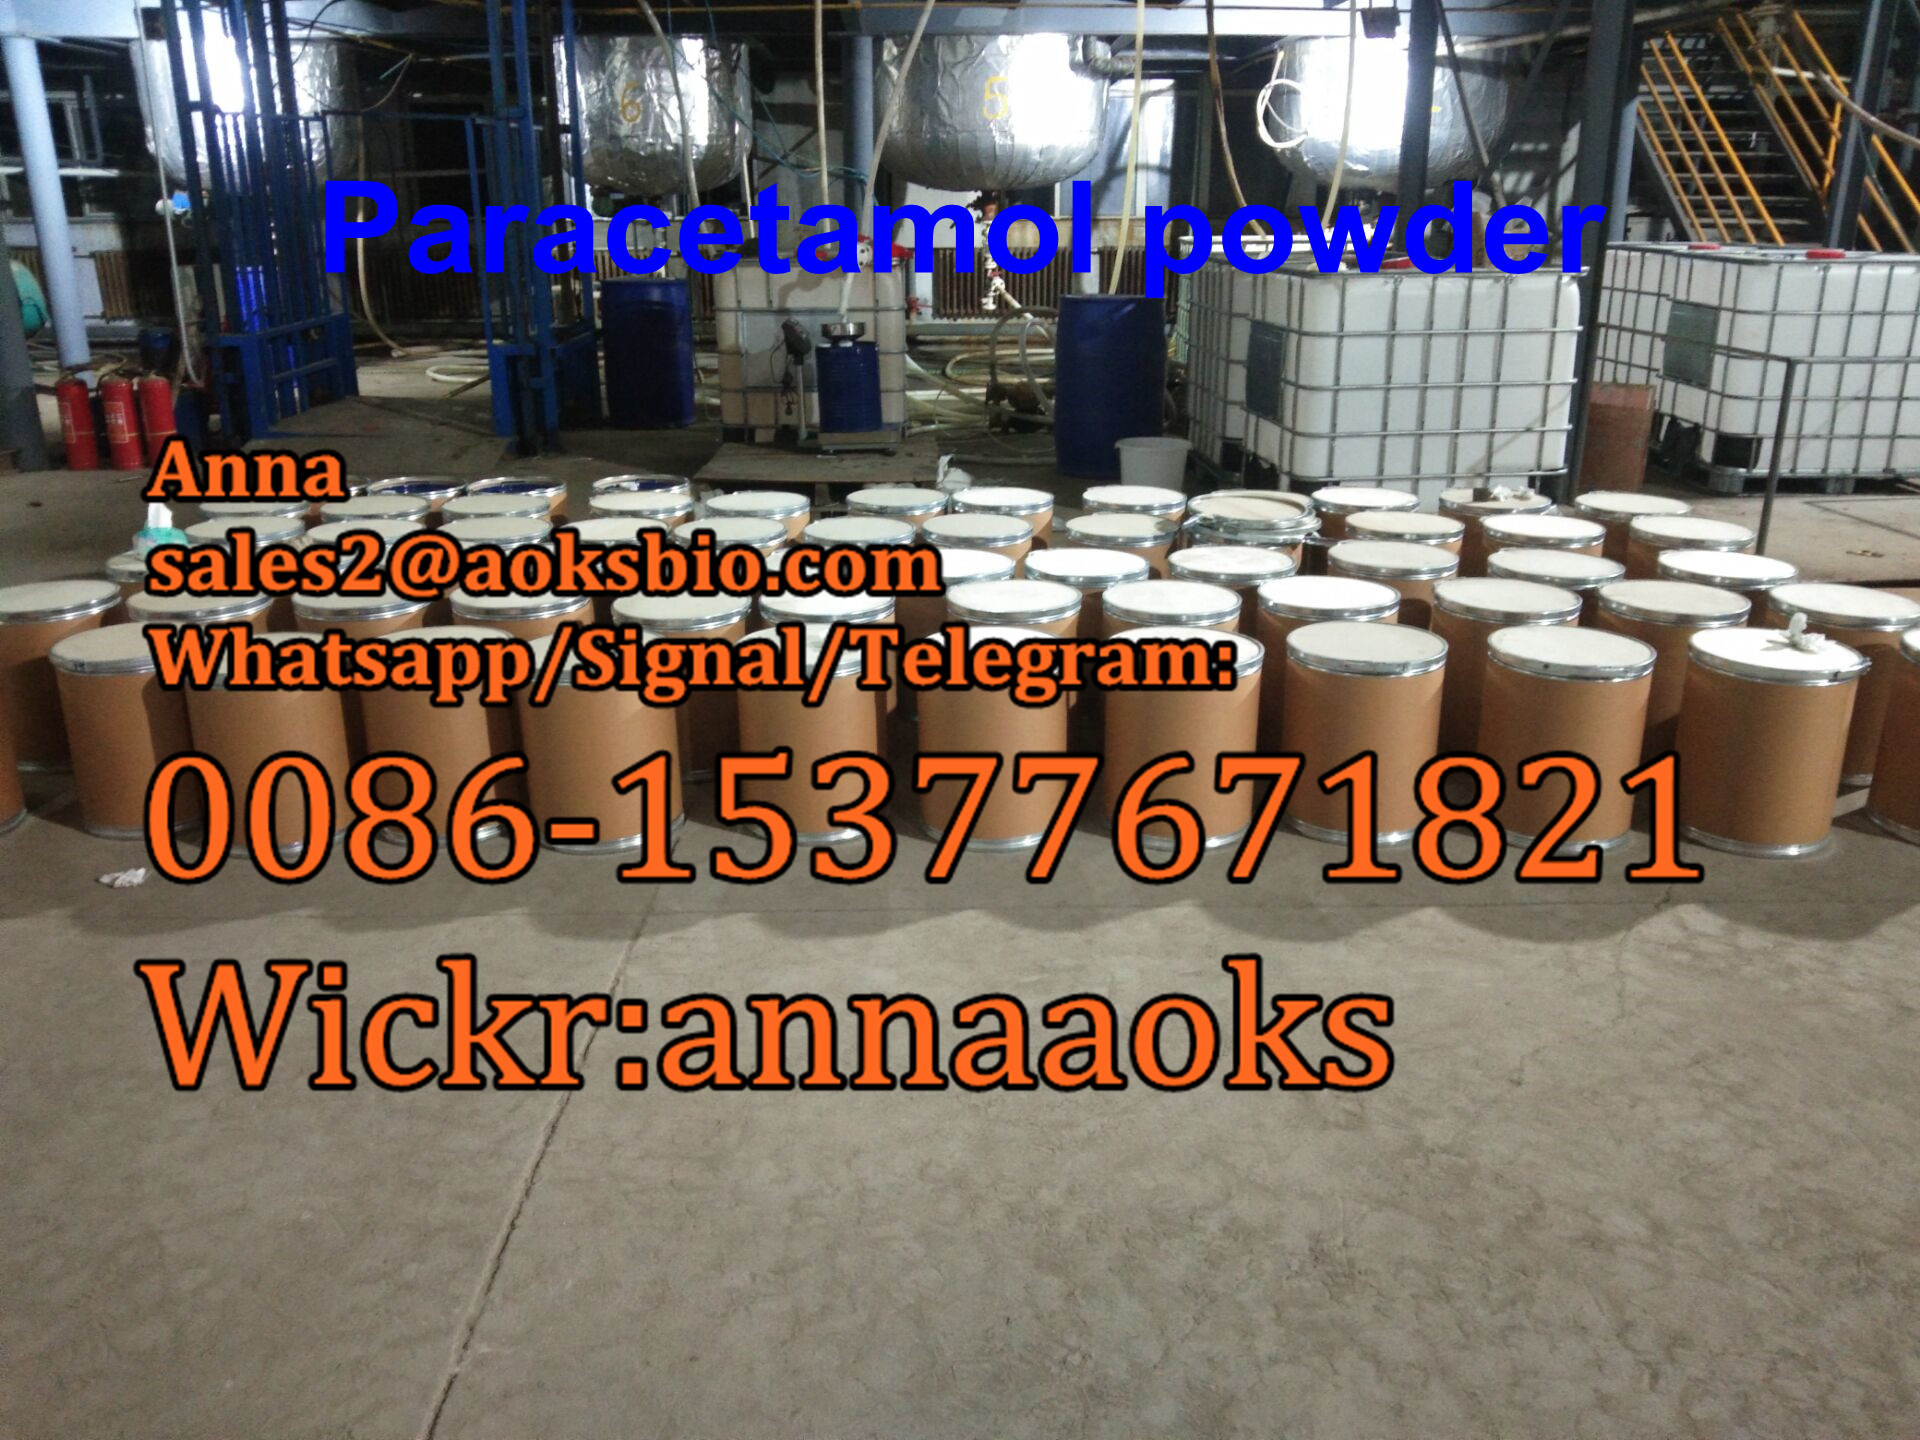 Paracetamol powder Acetaminophen price 103-90-2,sales2@aoksbio.com,Whatsapp:0086-15377671821 в городе Москва, фото 1, телефон продавца: +7 (153) 776-71-82